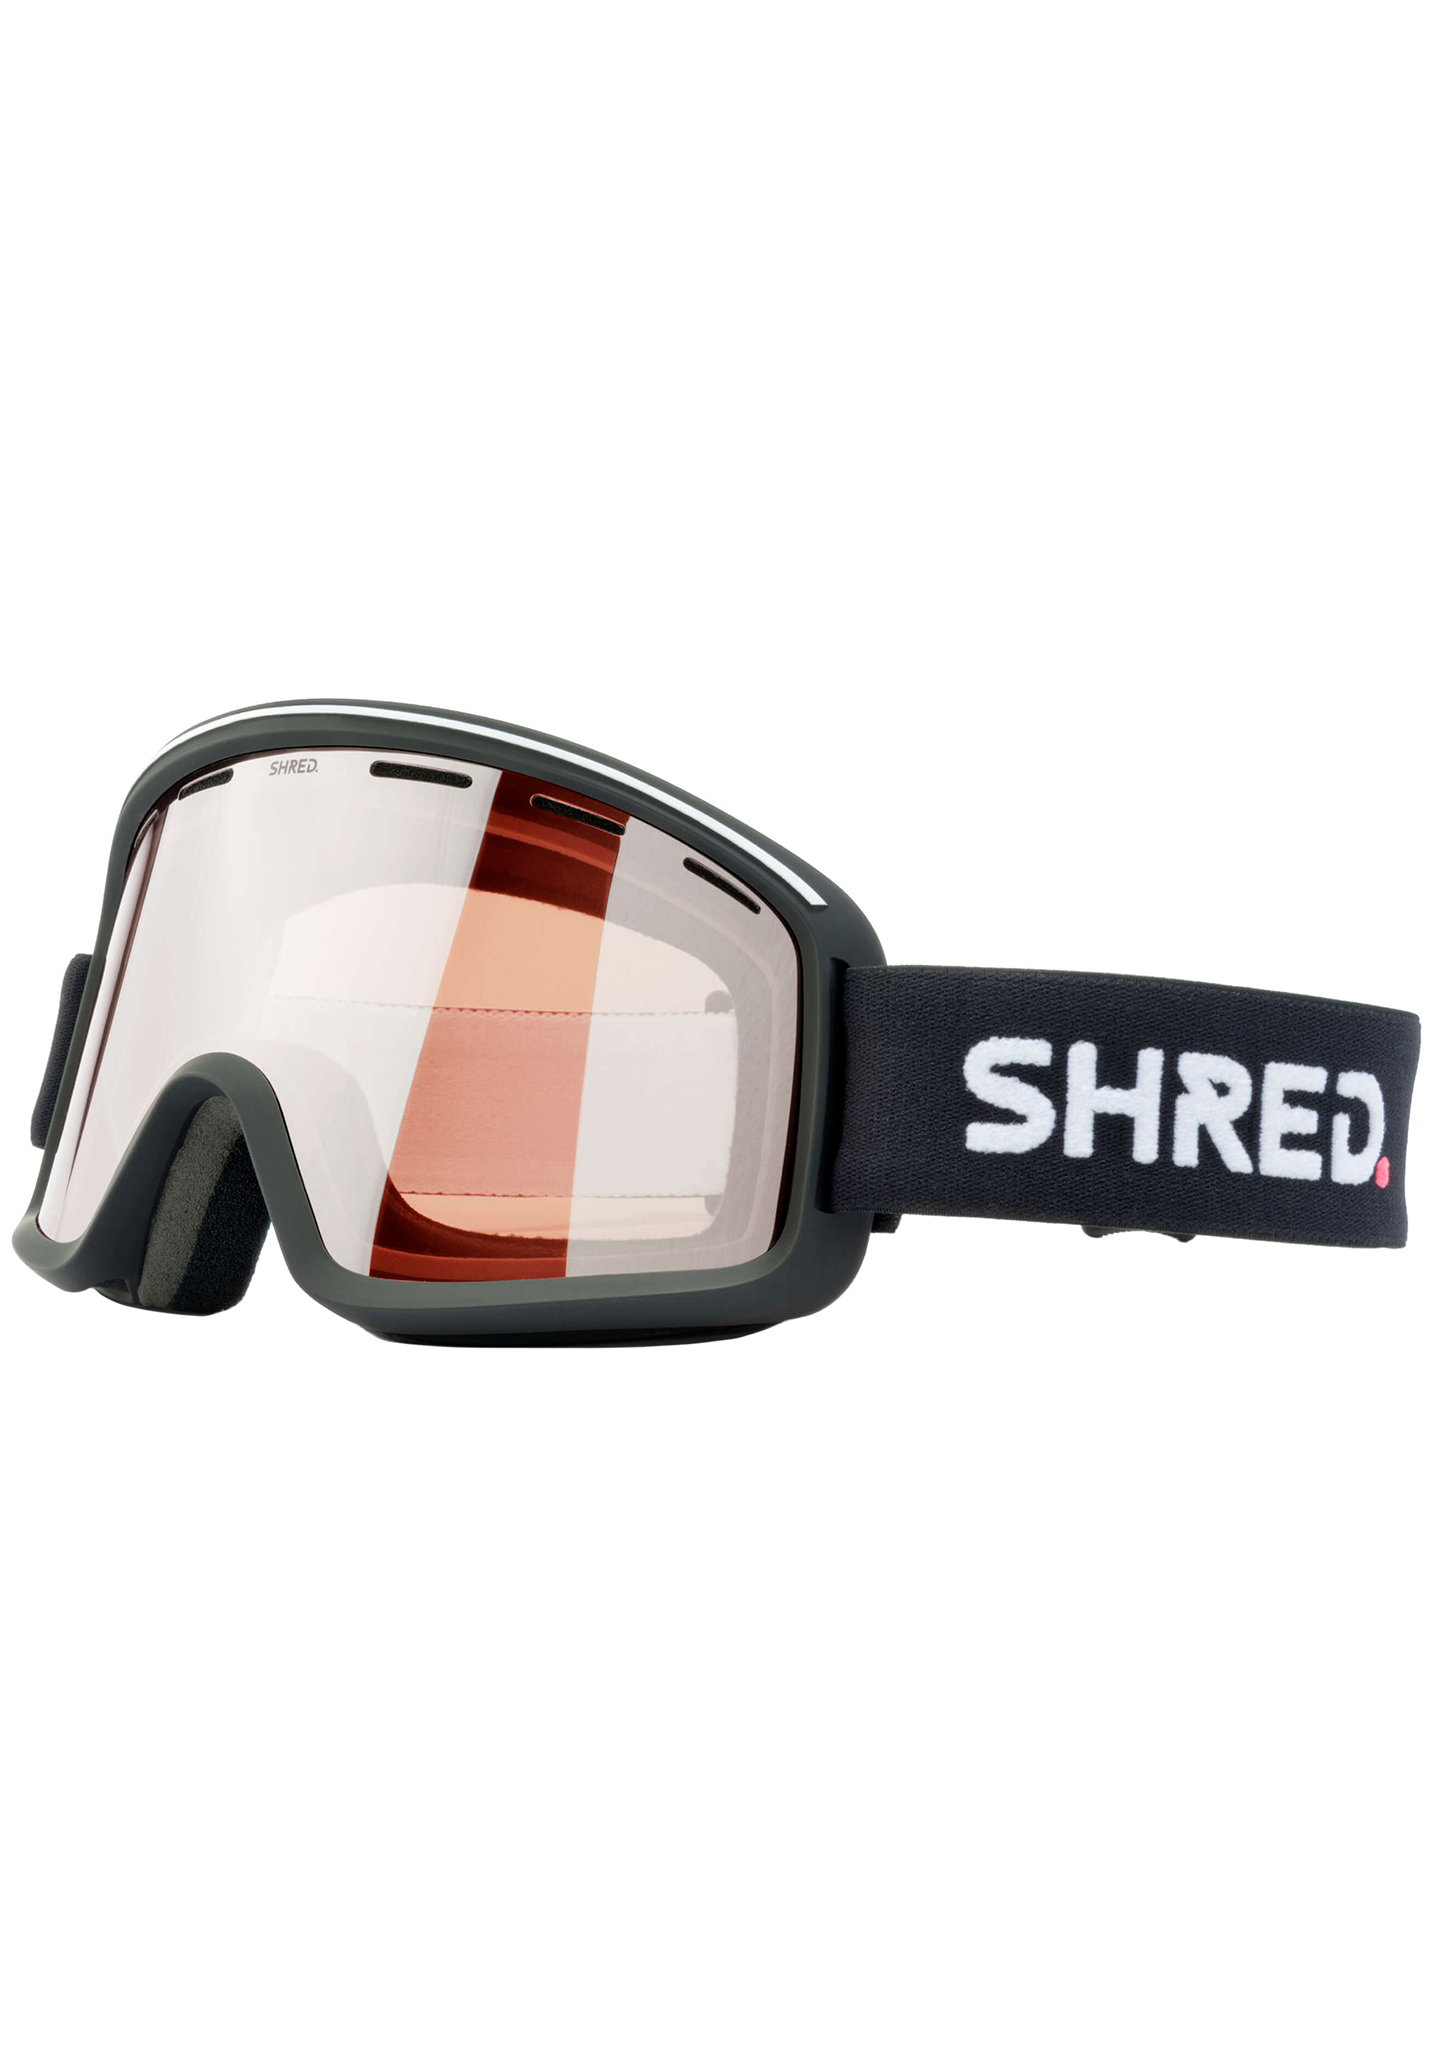 Shred Monocle Snowboardbrillen schwarz/niedrig hell silber One Size